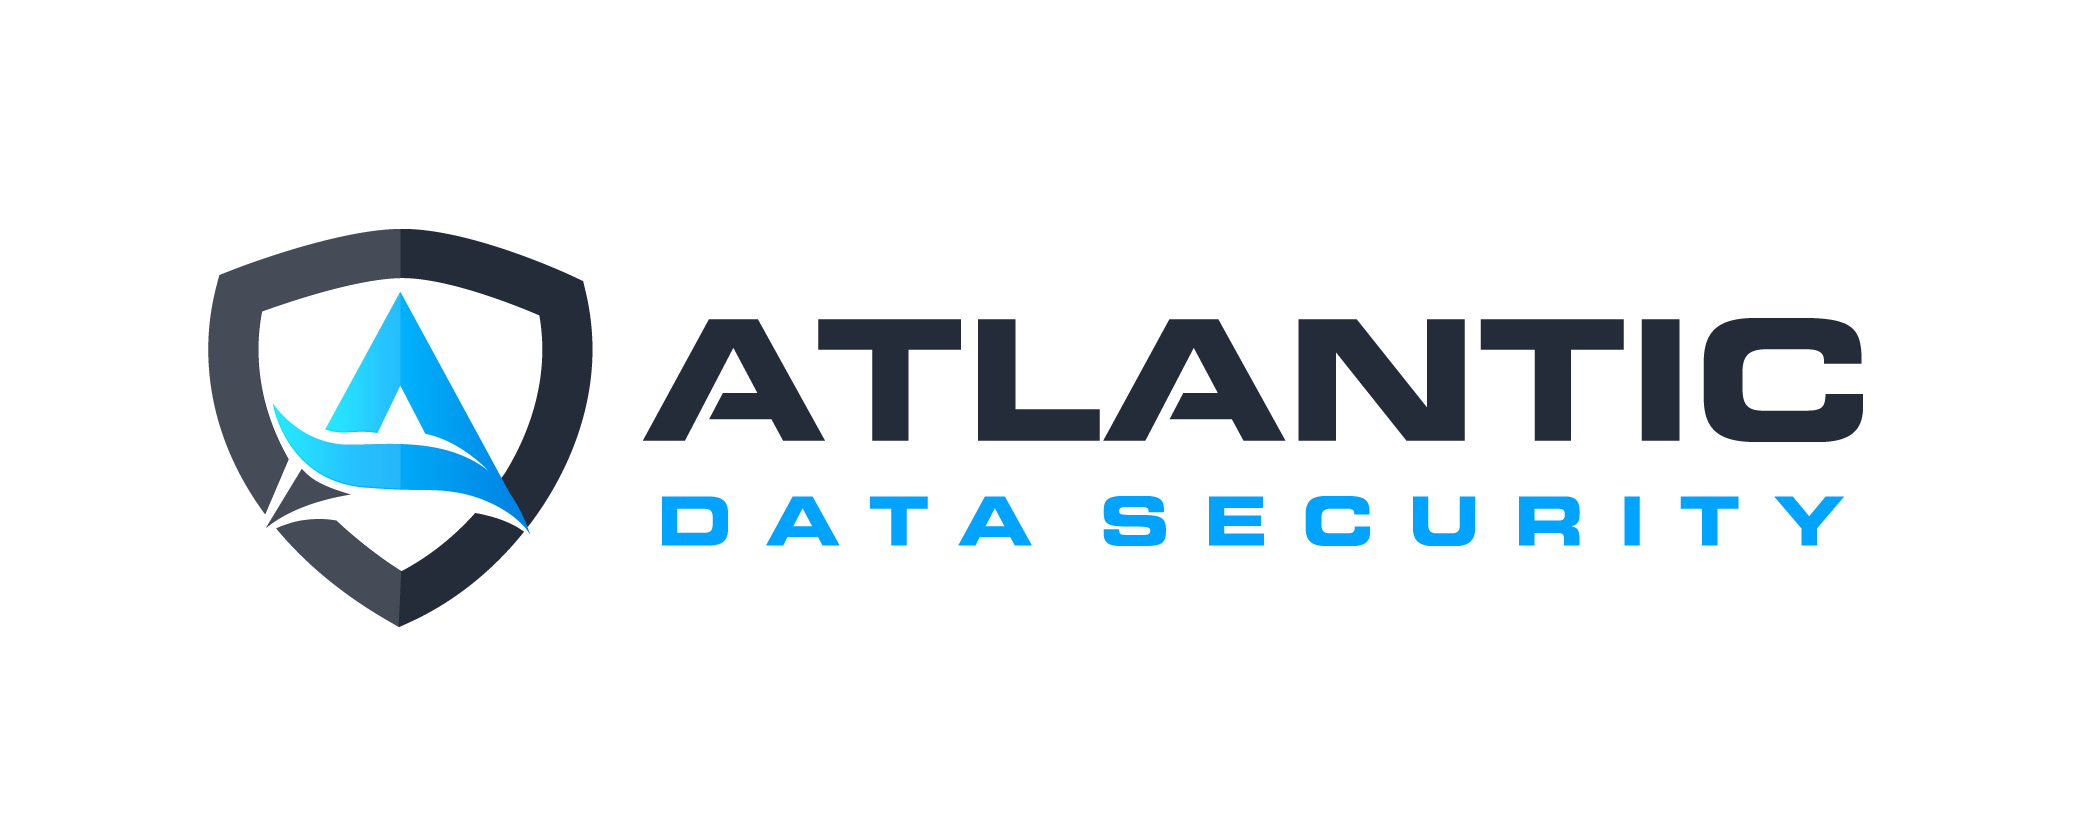 Atlantic Data Security Logo